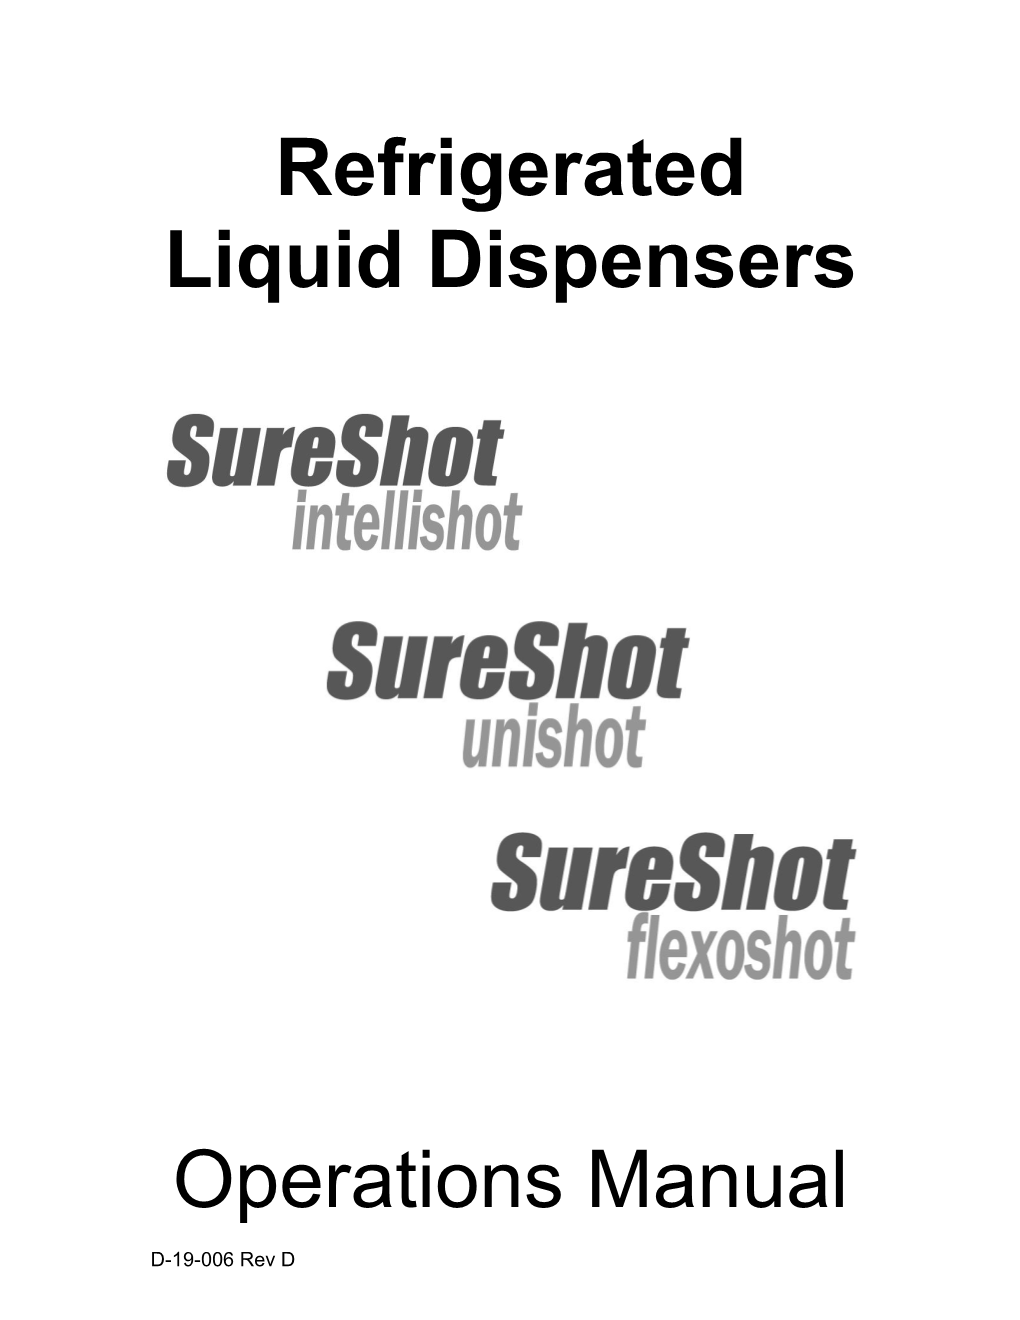 Refrigerated Liquid Dispensers Operations Manual